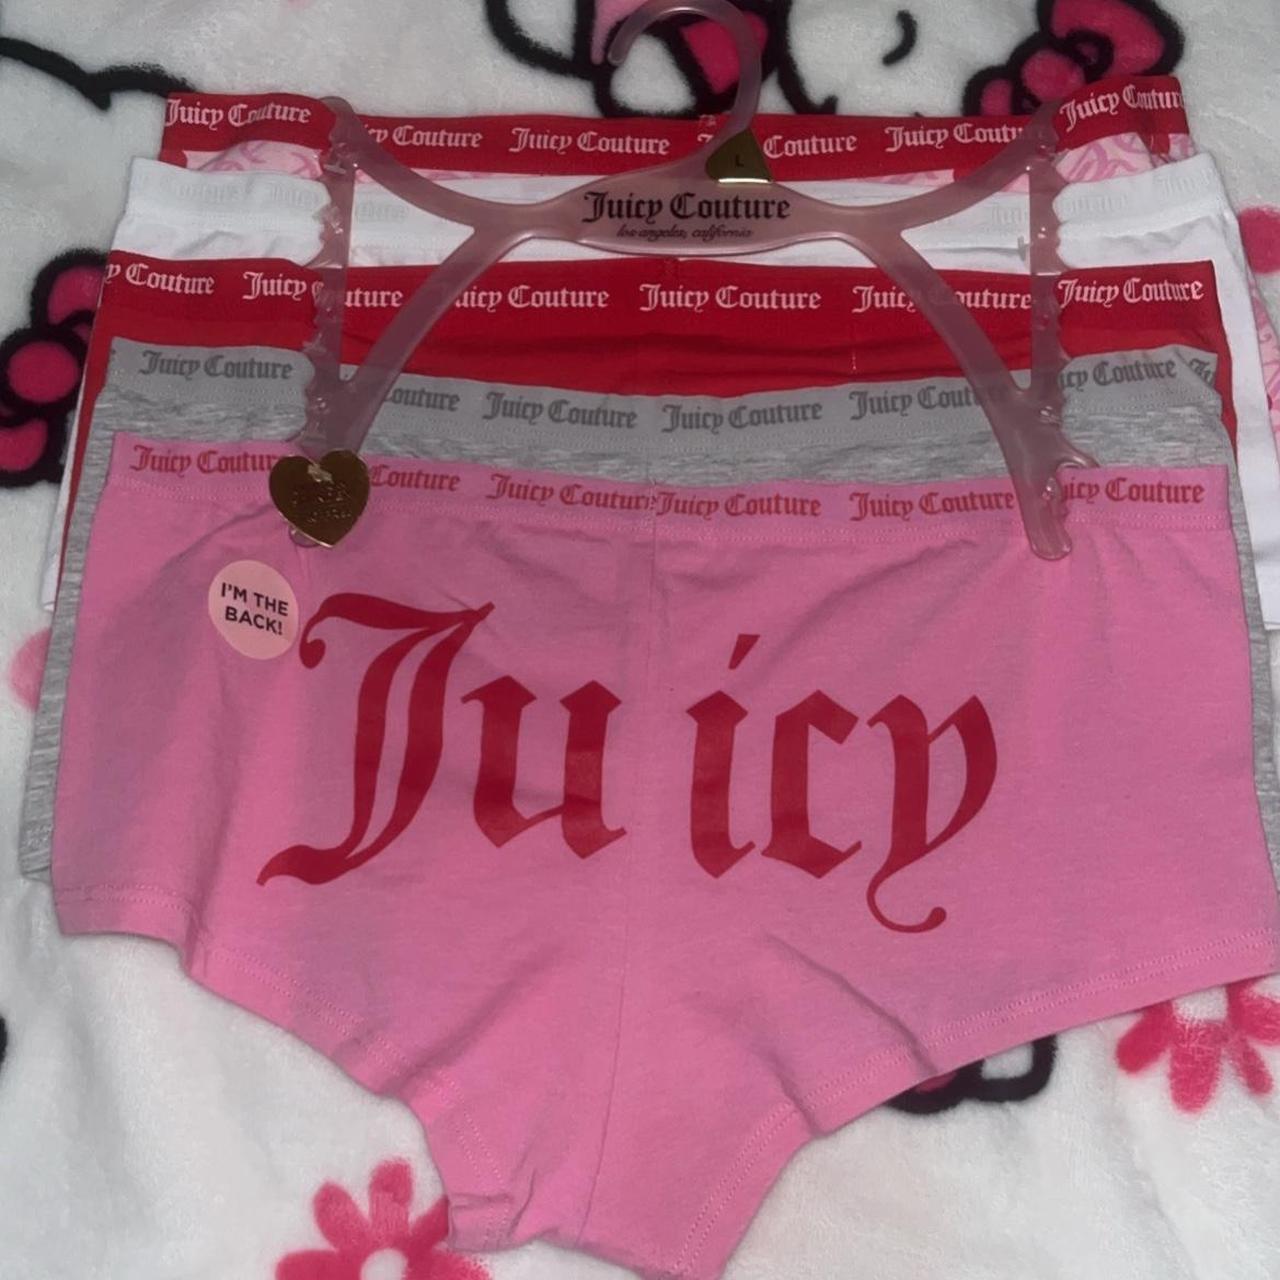 Juicy couture underwear - Depop